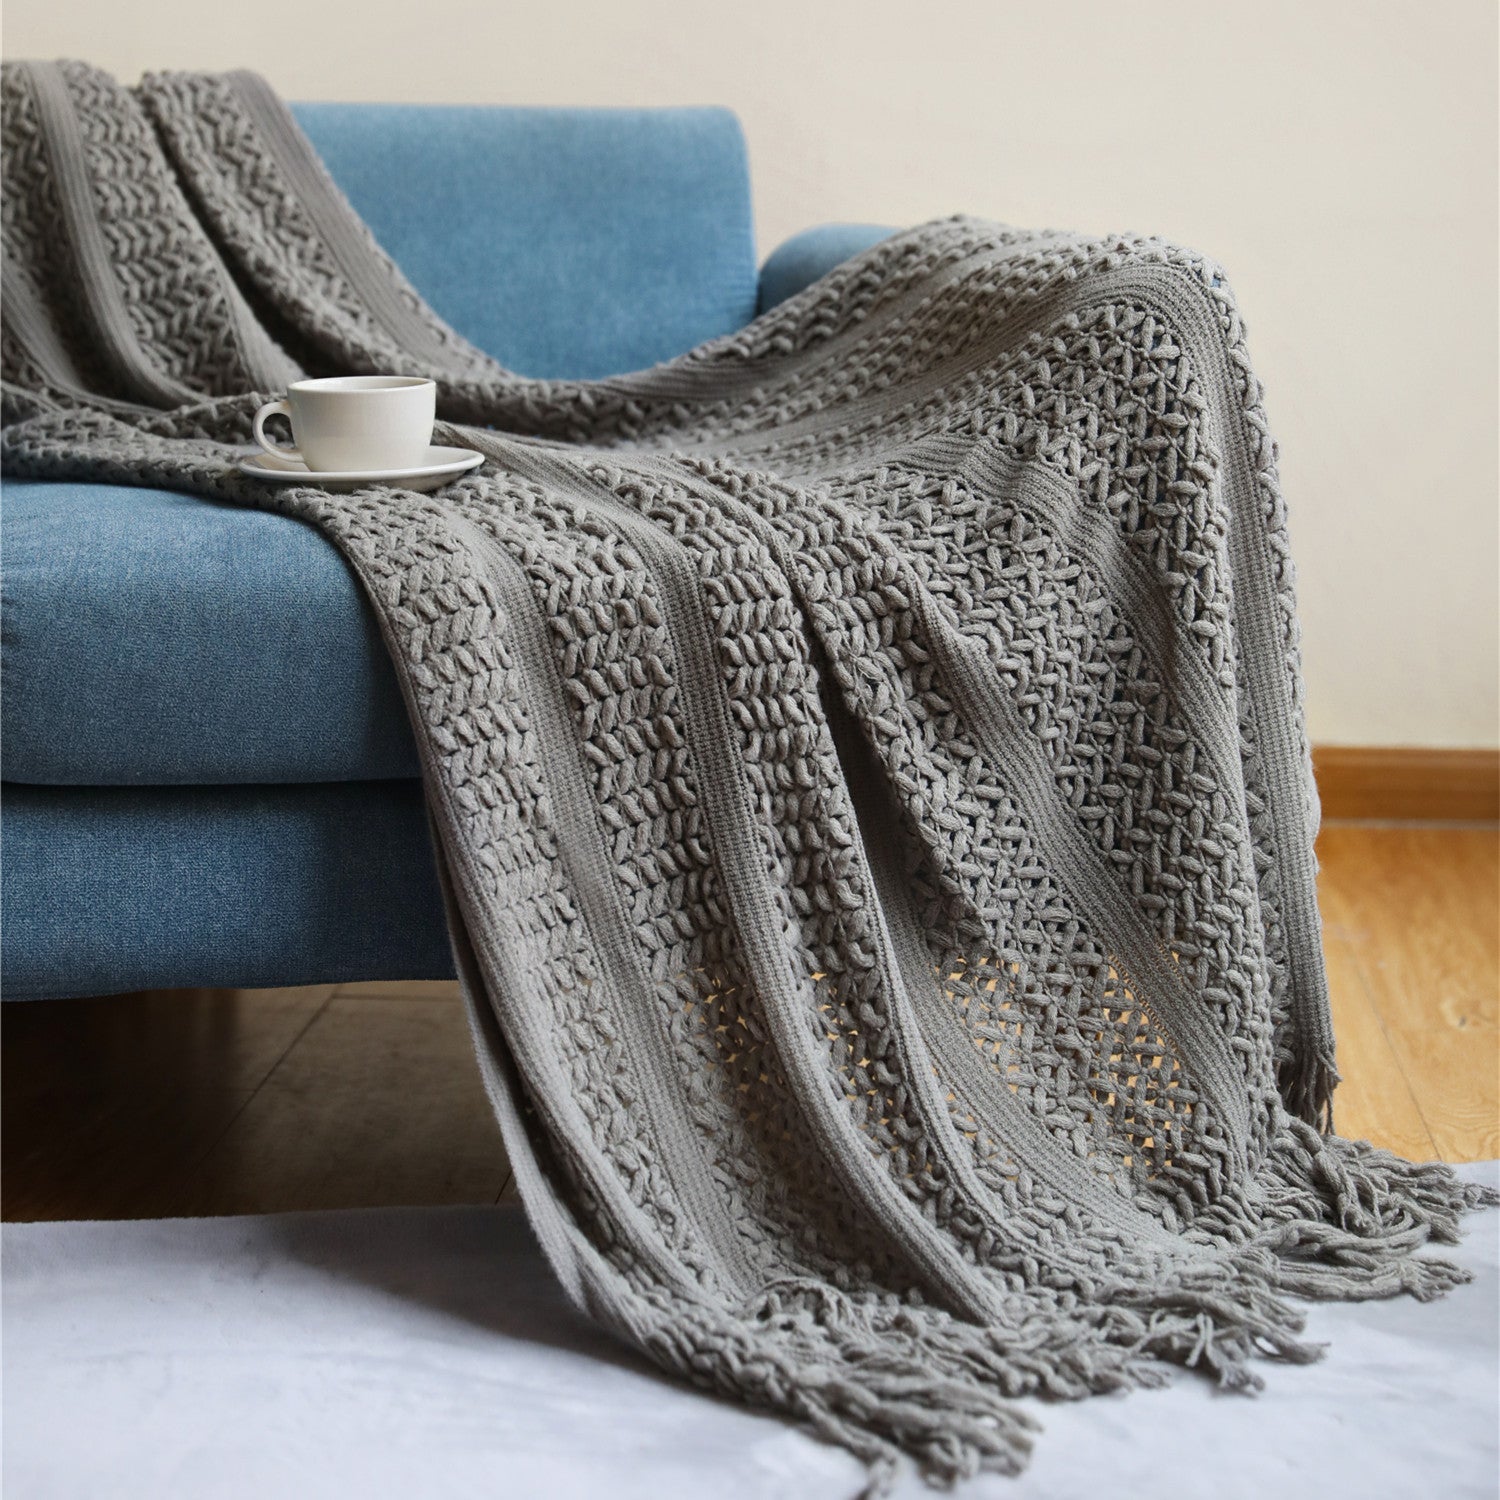 127x152cm Cozy Decorative Knit Woven Throw Blanket Sofa Throw Bed Throw Bed Blanket